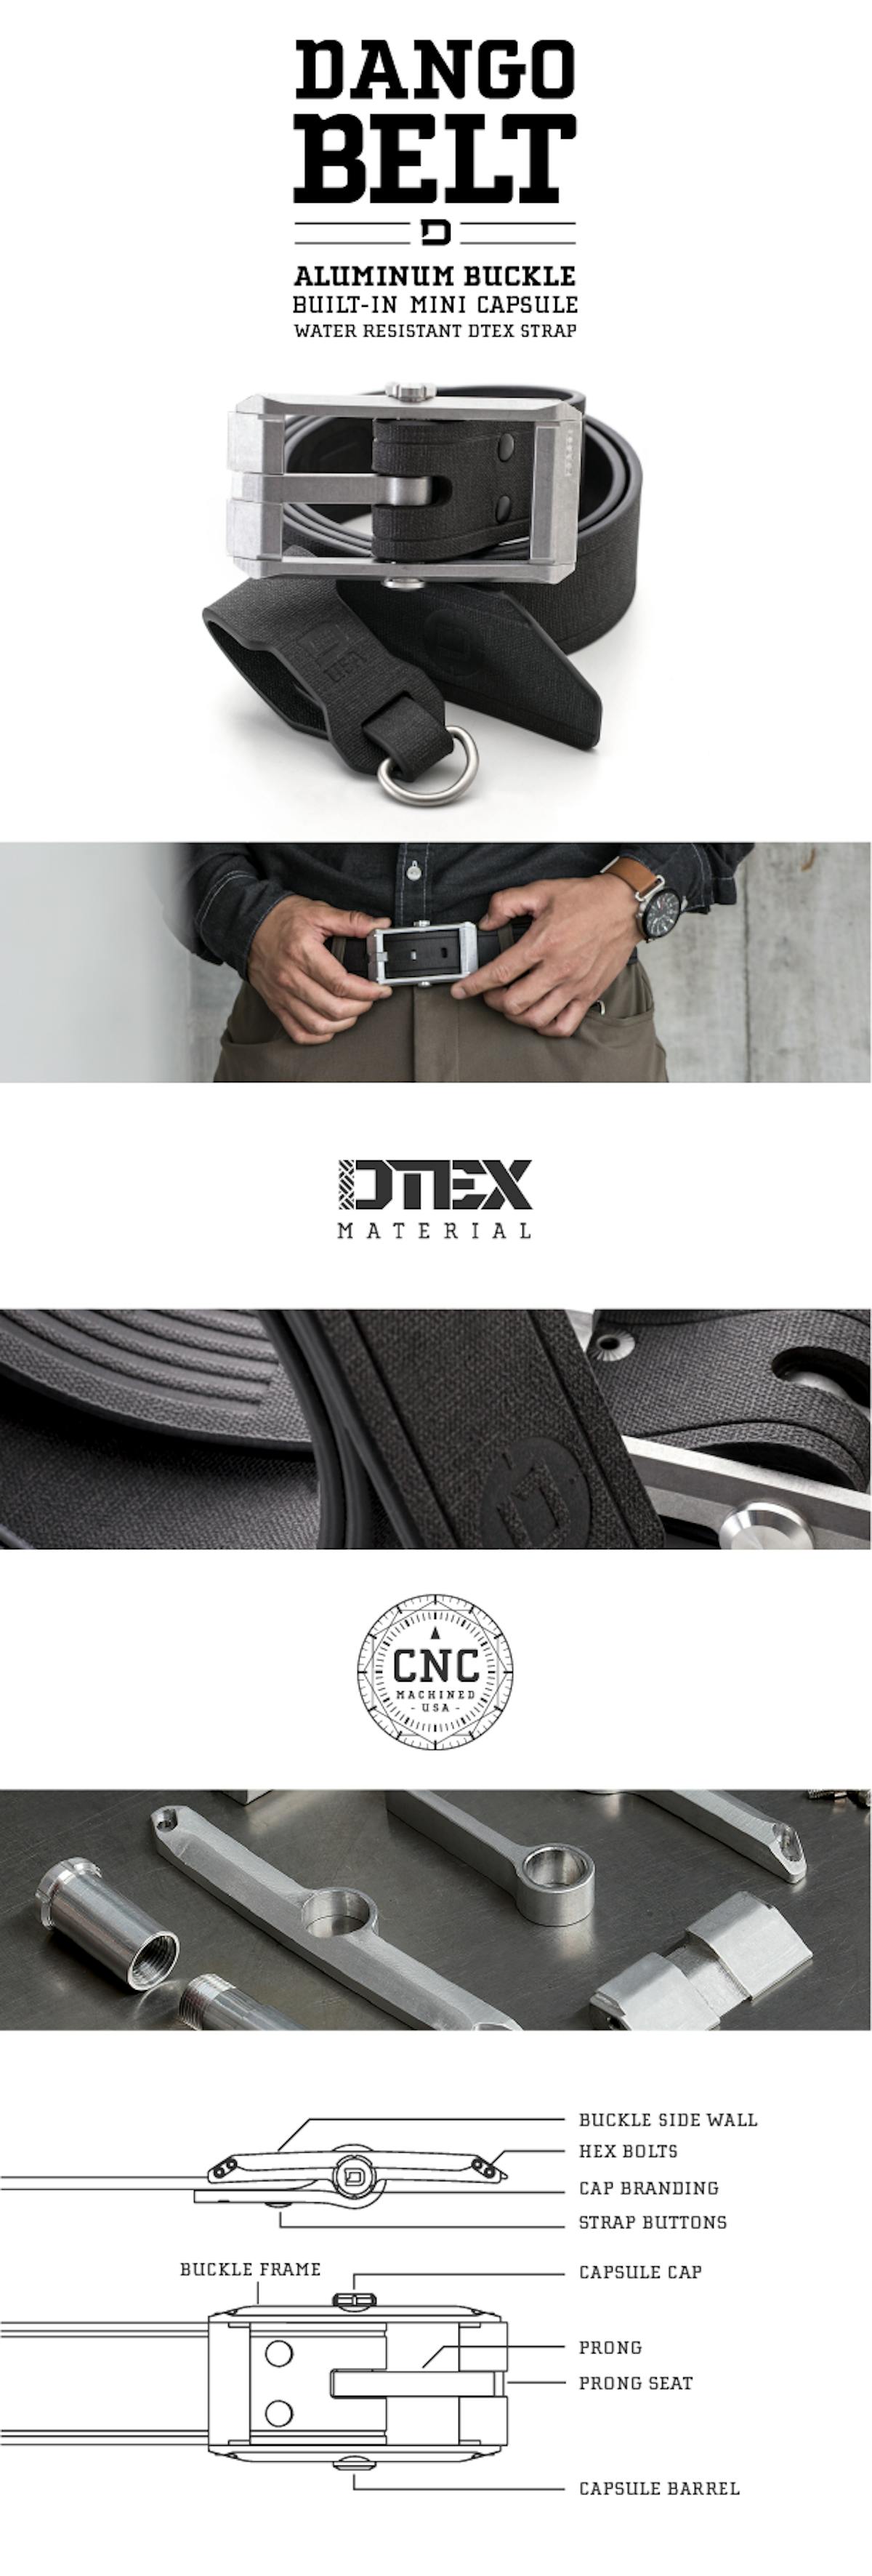 Dango DTEX Belt